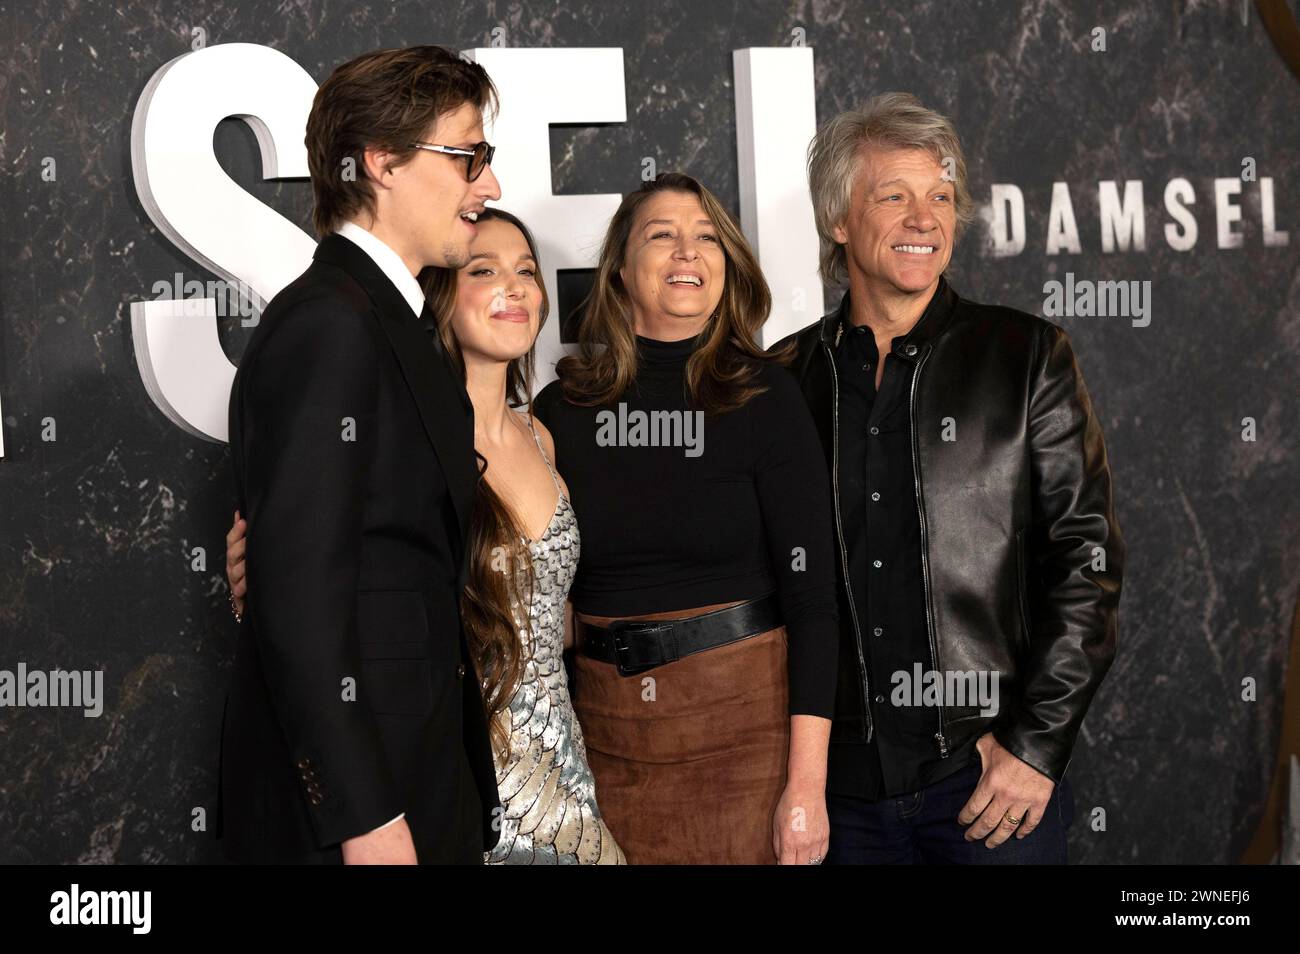 Jake Bongiovi, Millie Bobby Brown, Dorothea Hurley e Jon Bon Jovi bei der Premiere des Netflix-Films 'Damsel' im Paris Theater. New York, 01.03.2024 Foto Stock